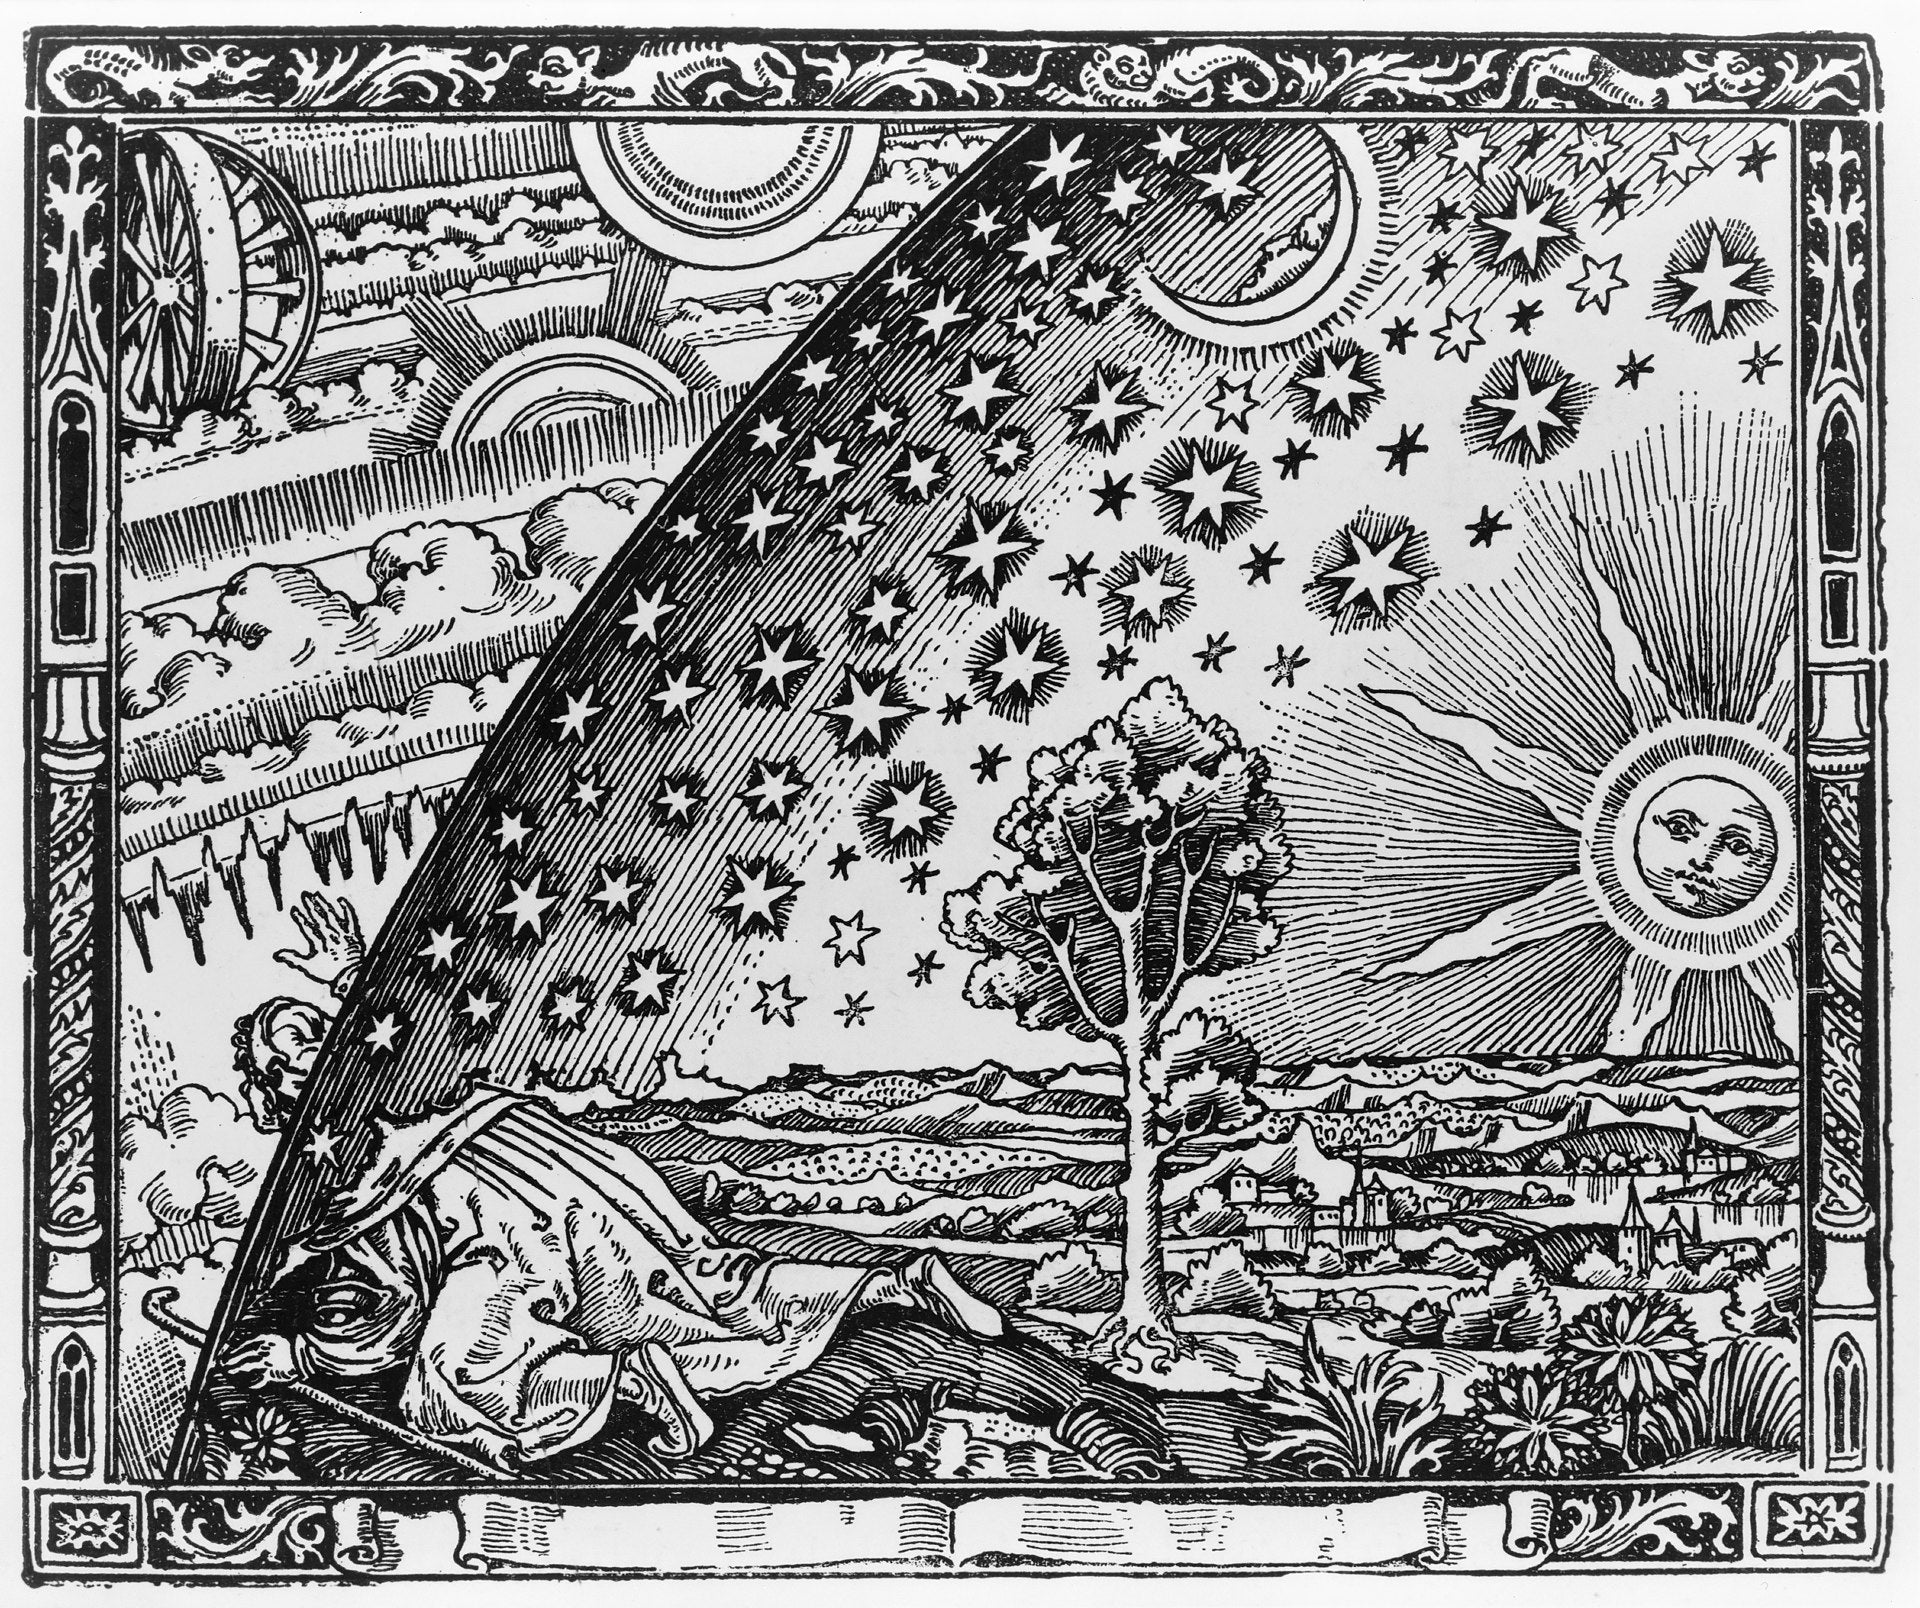 Flammarion Engraving; Where the Earth meets Heaven